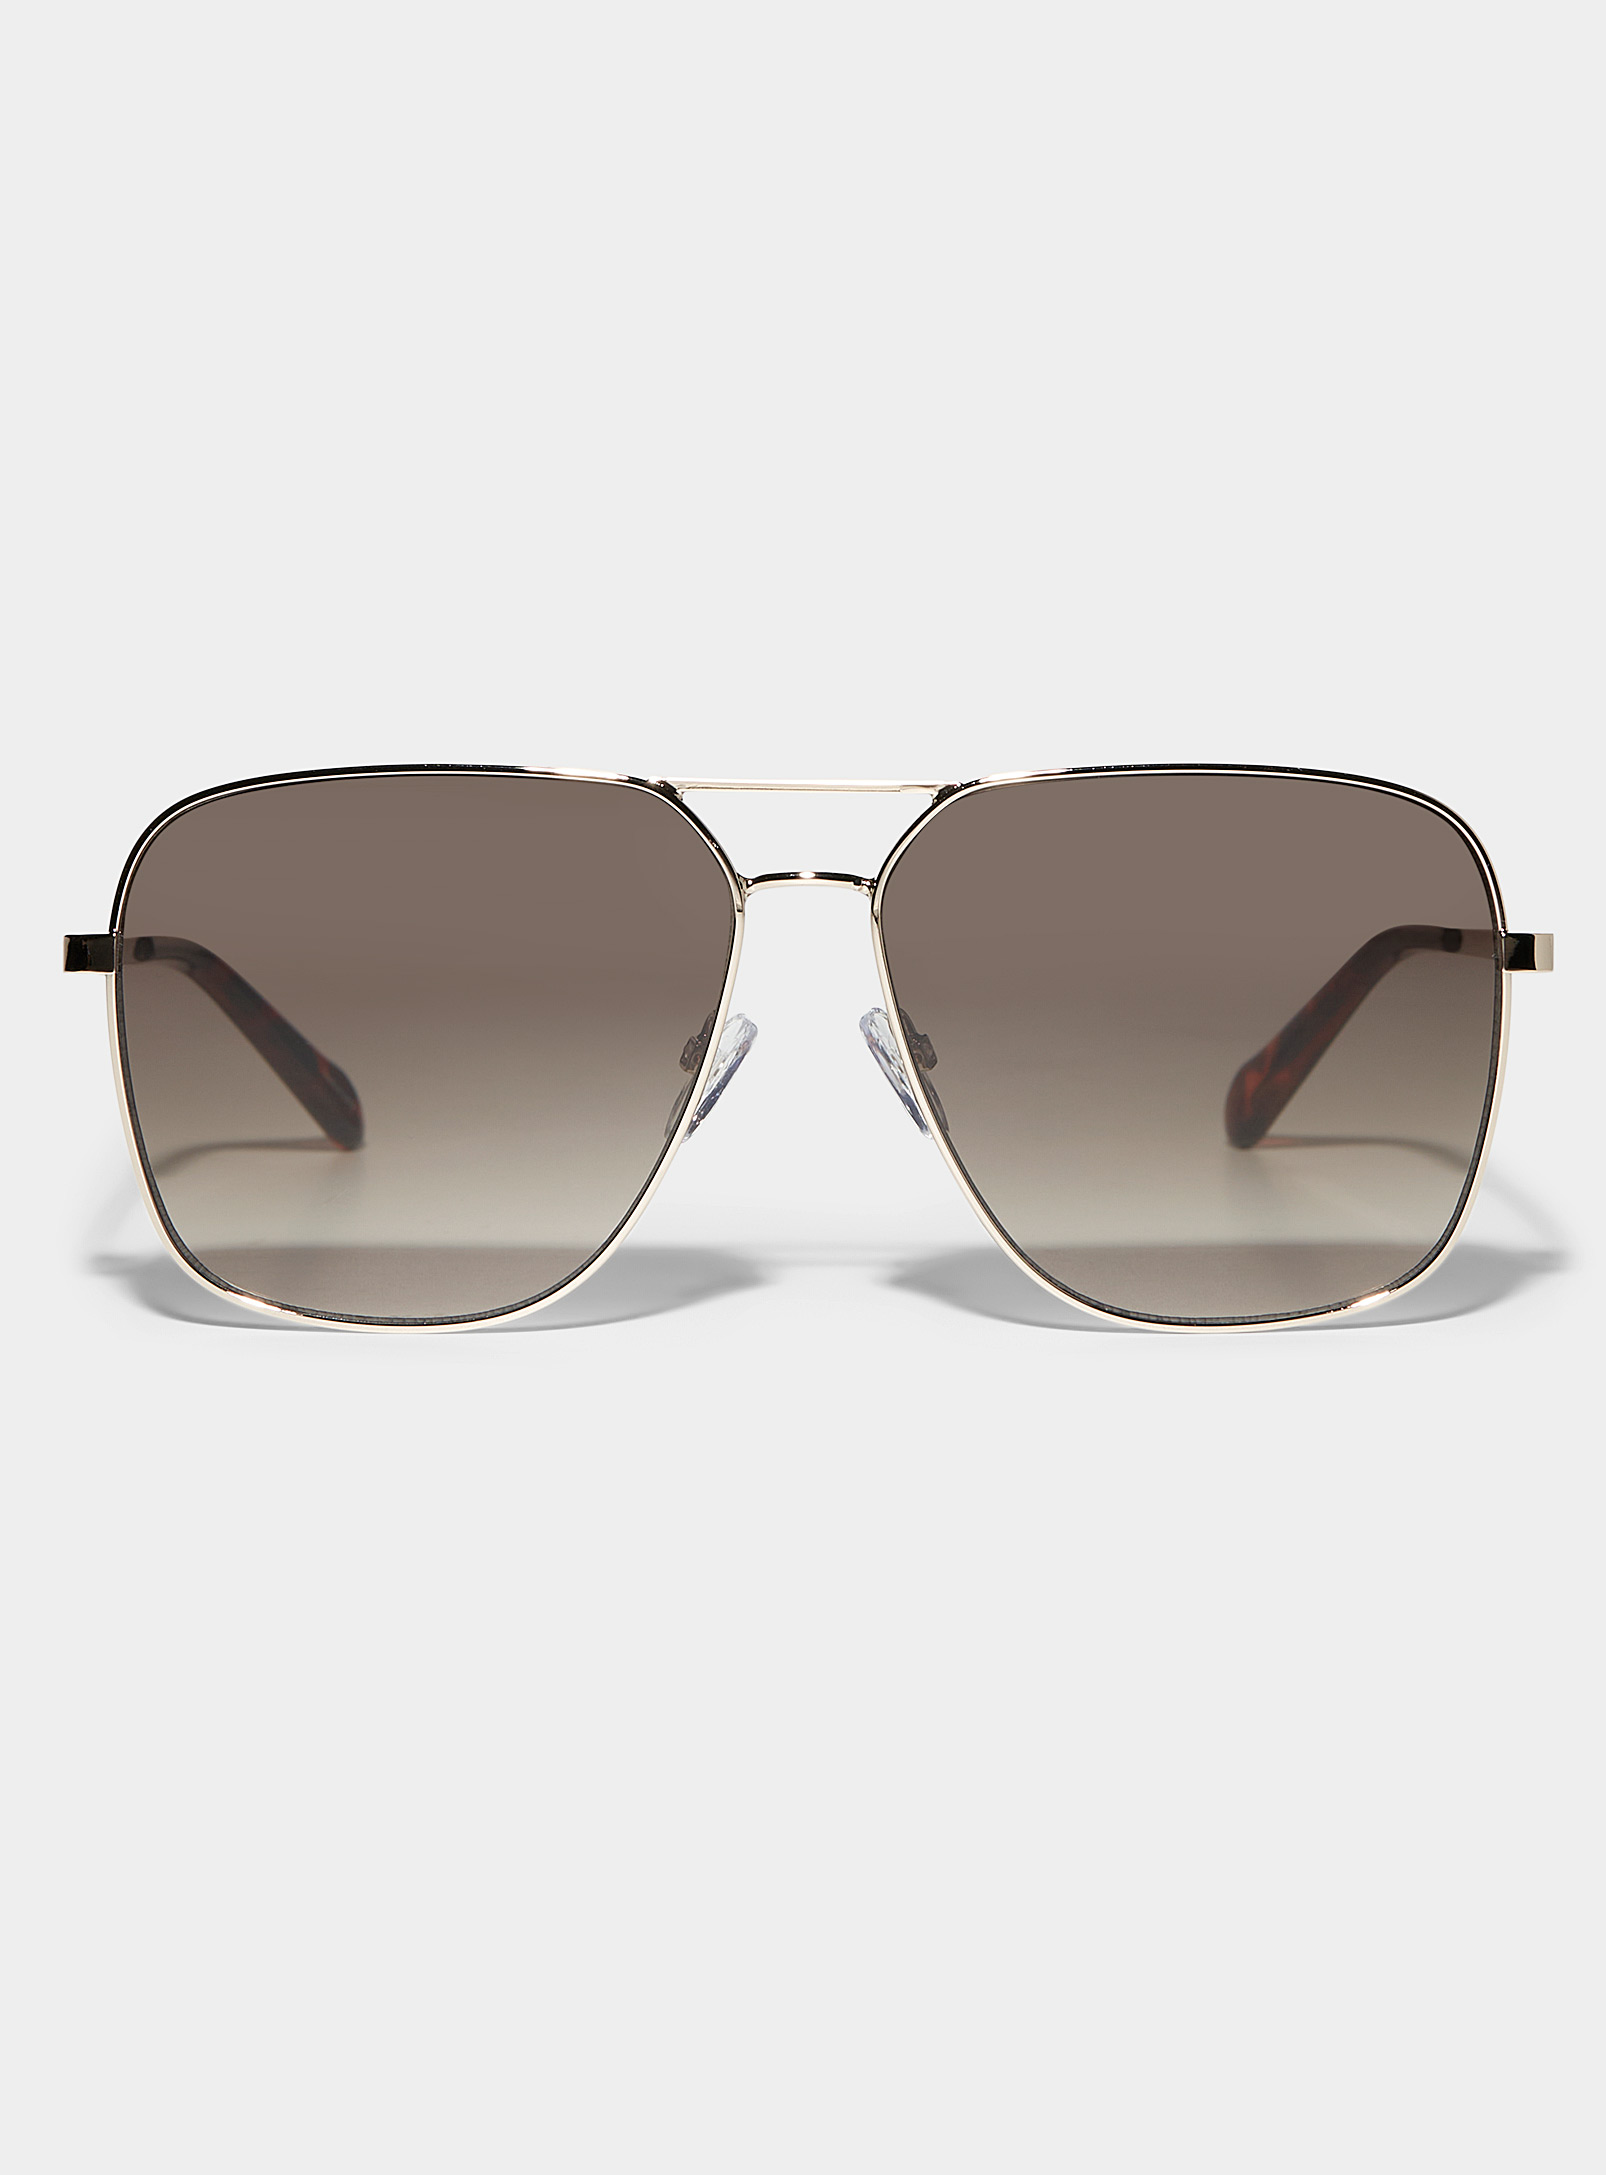 Fossil - Women's Golden minimalist aviator sunglasses